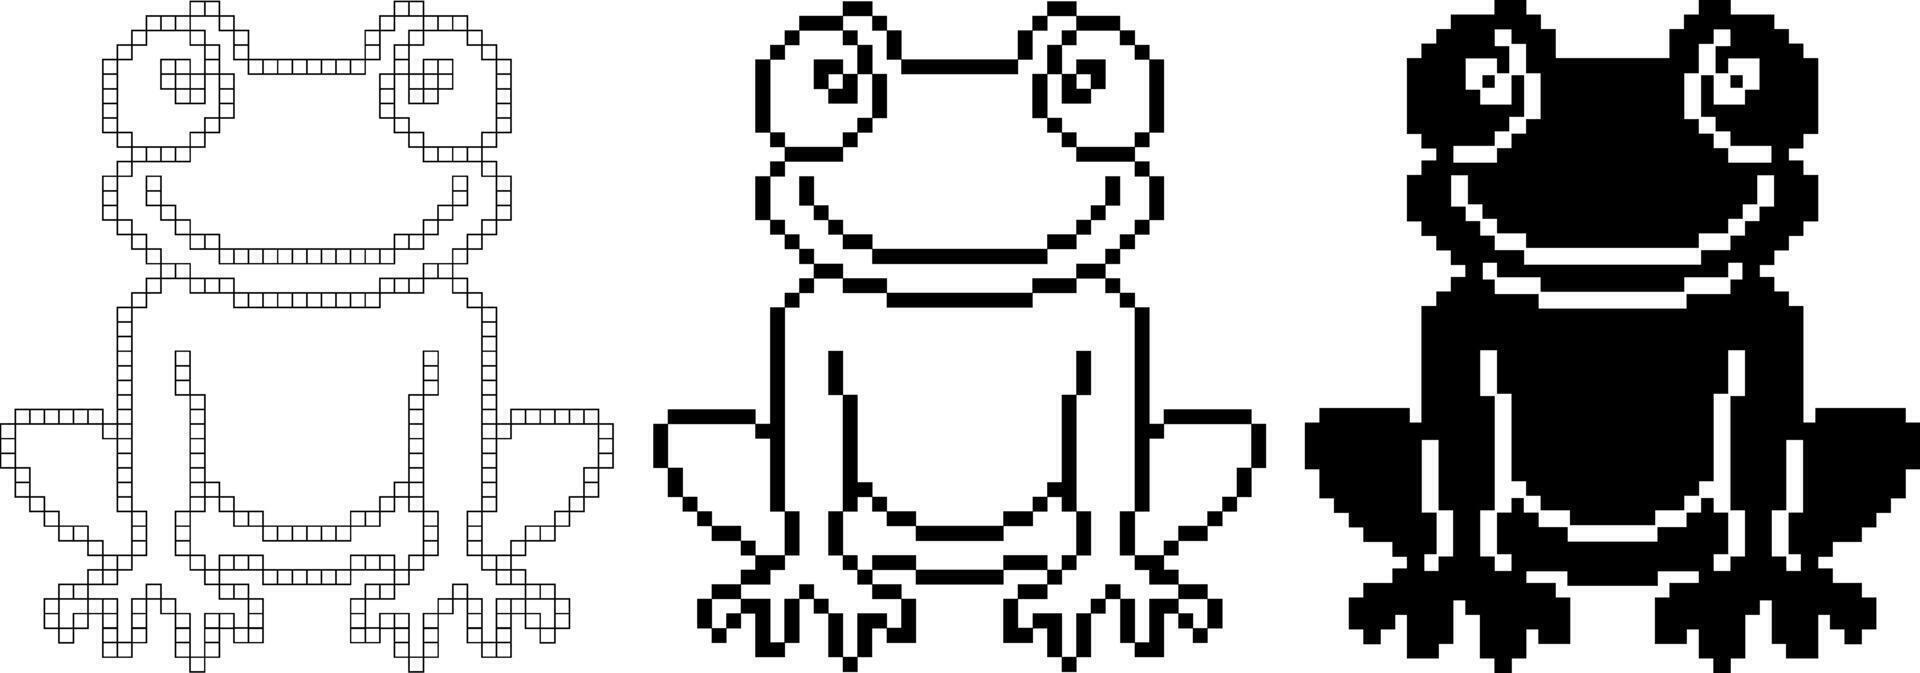 front view pixel art frog icon vector